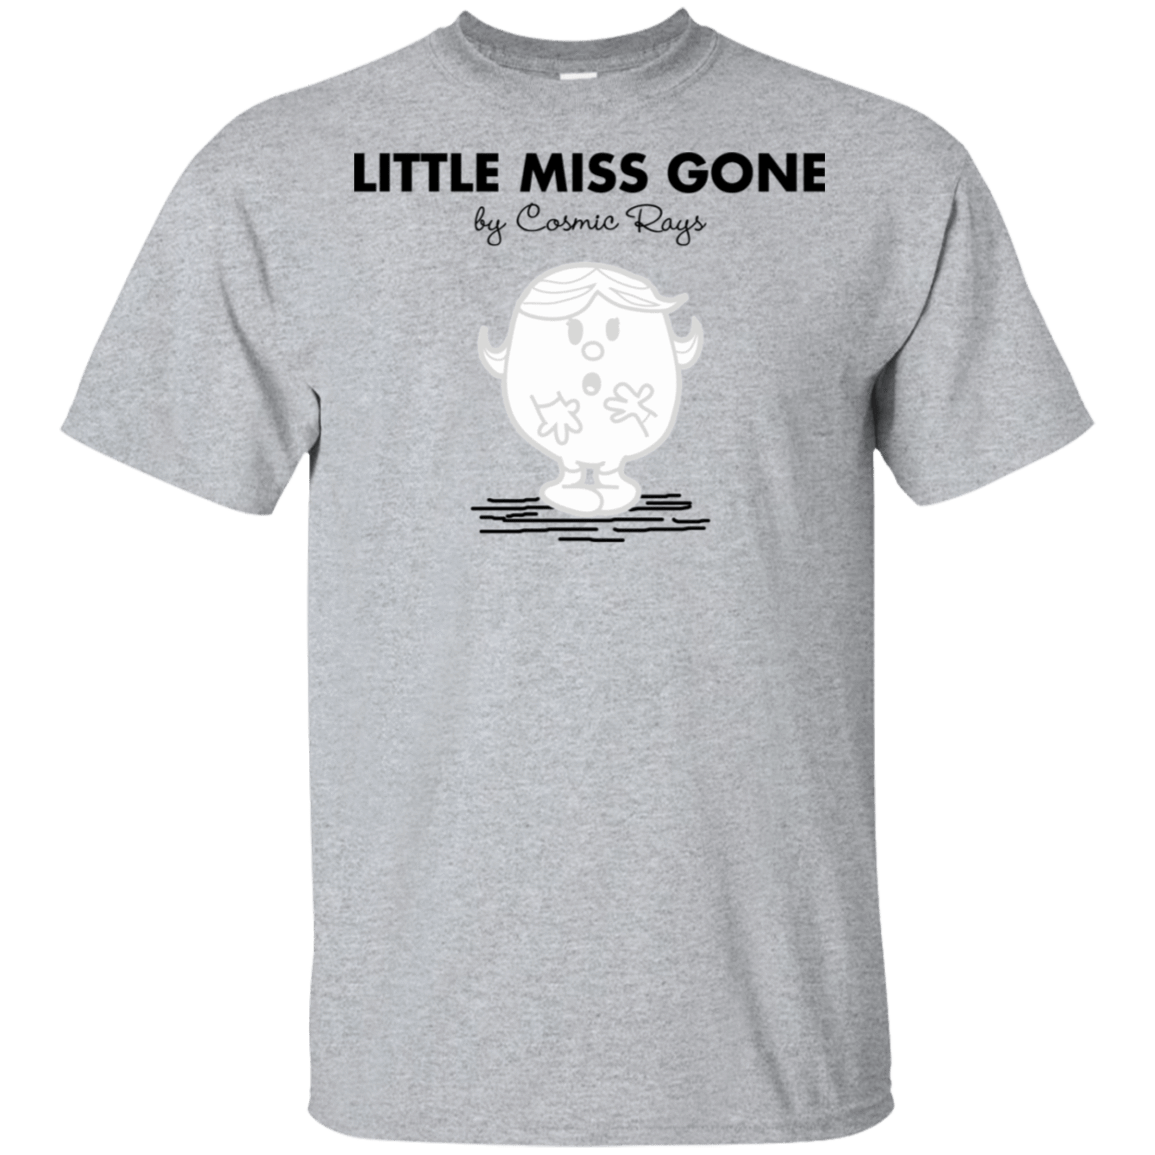 T-Shirts Sport Grey / S Little Miss Gone T-Shirt